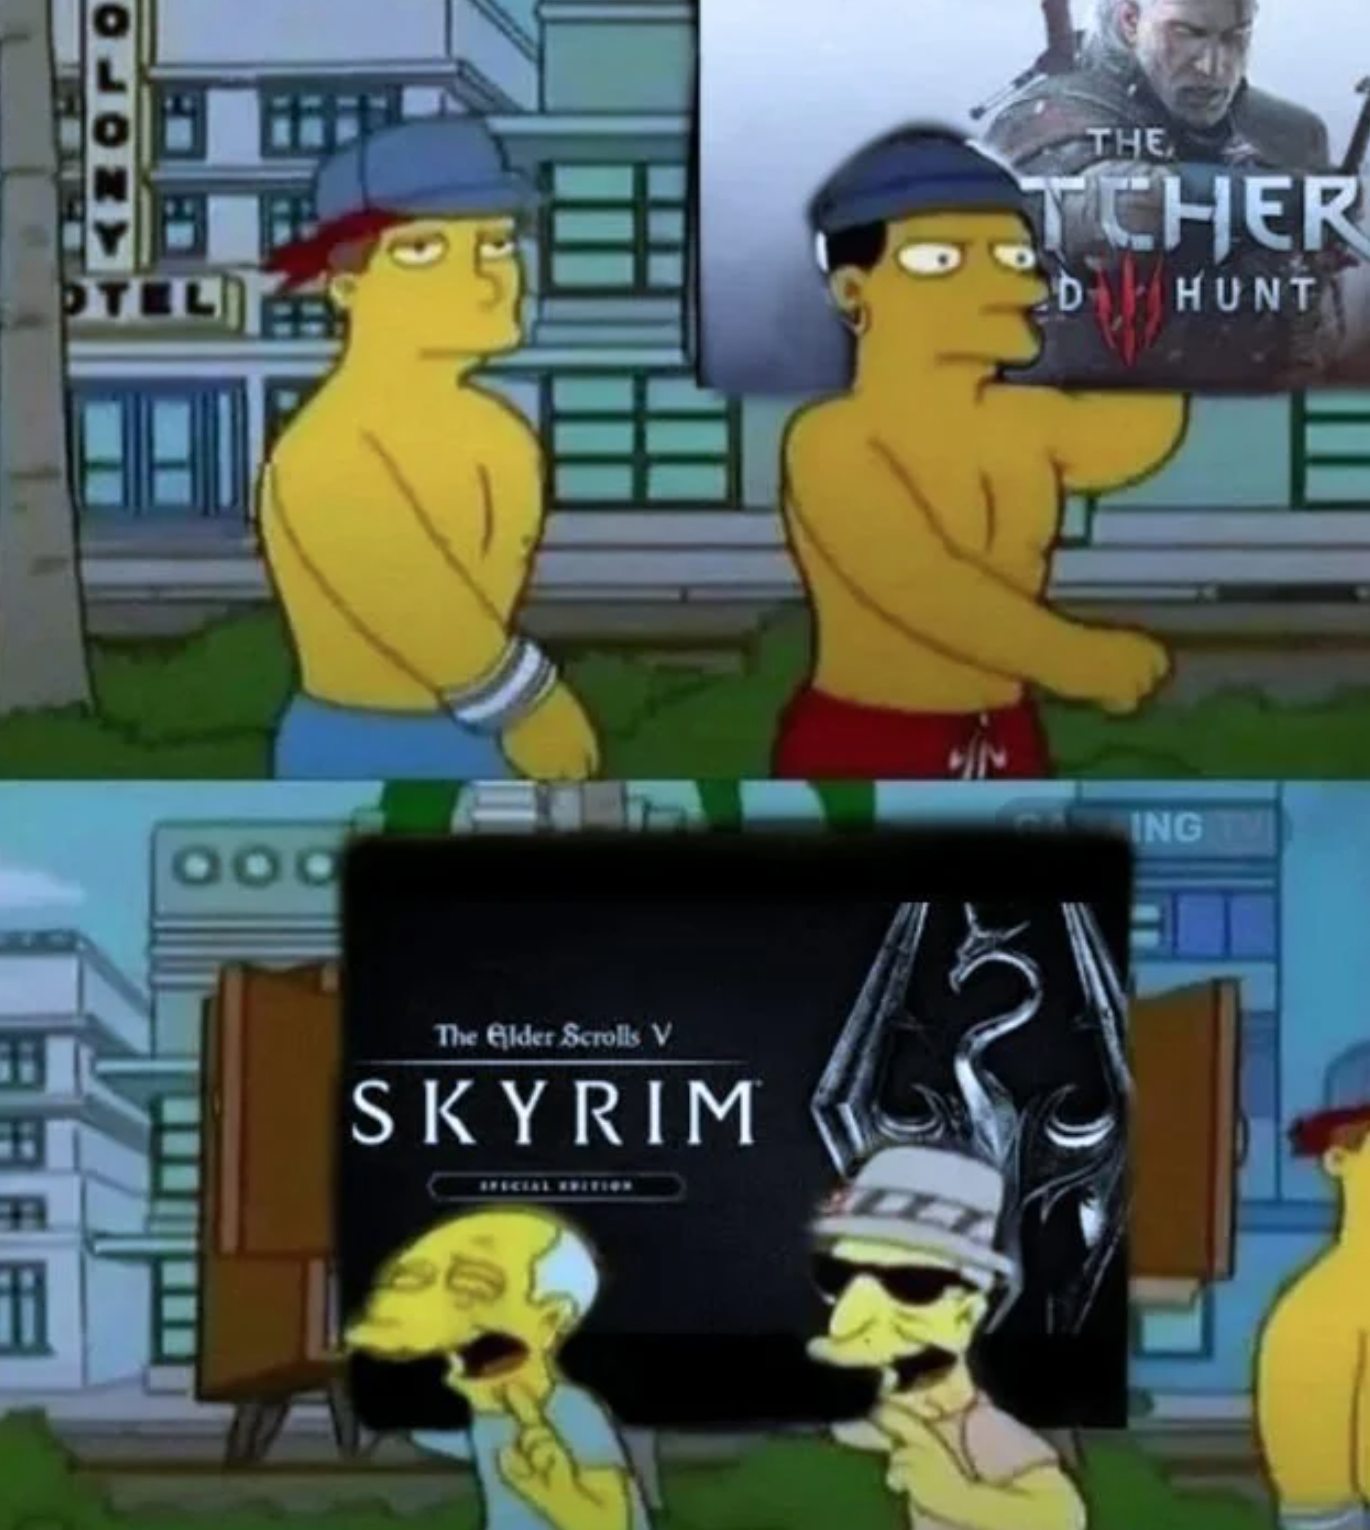 funny gaming memes - Zoro The Tcher Stel Hunt Ing ood The Elder Scroll Skyrim